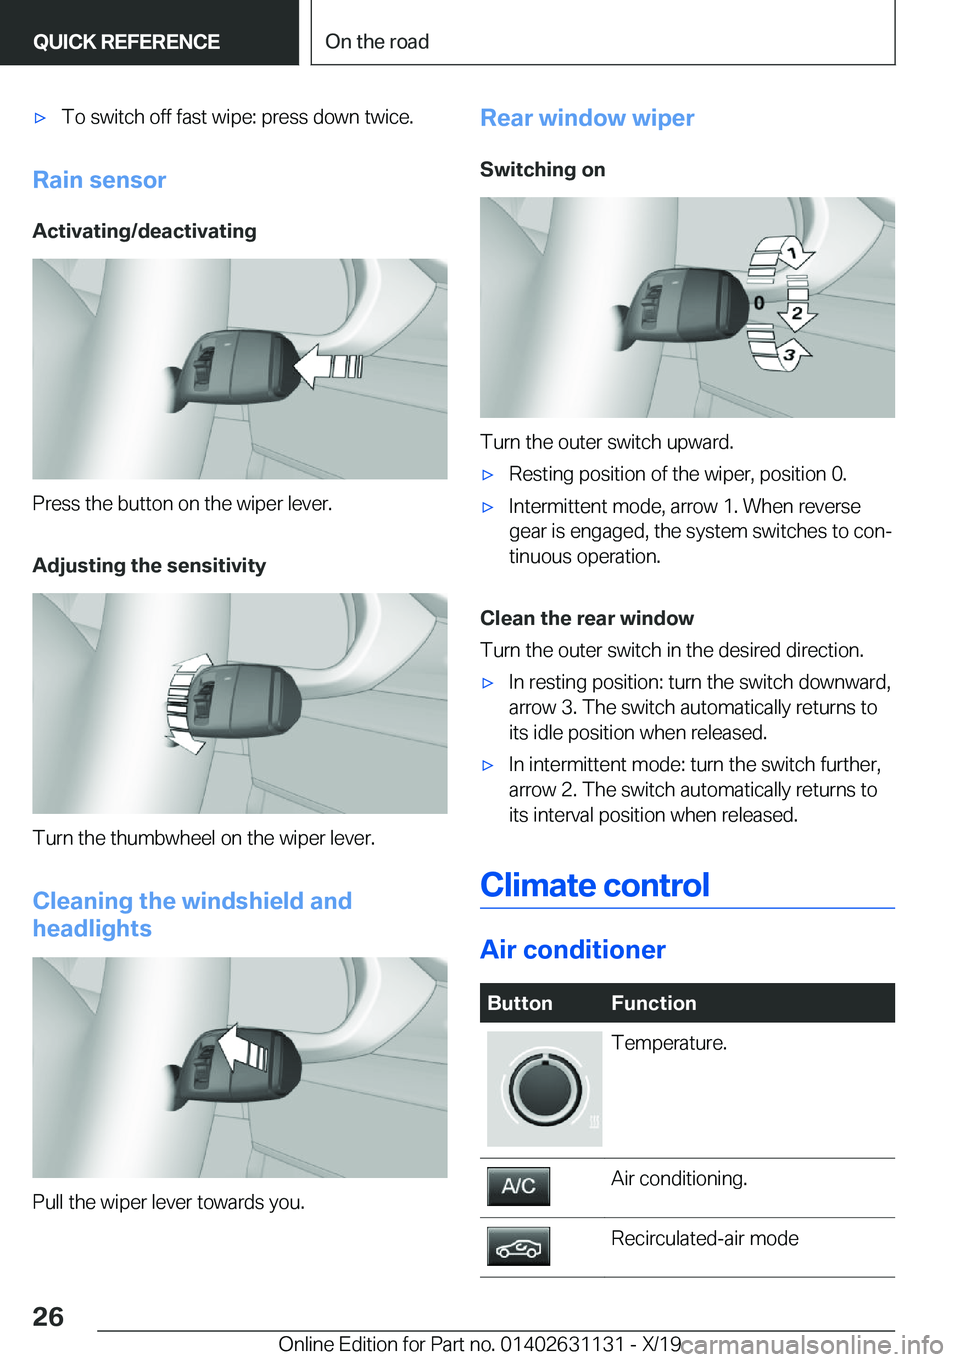 BMW X1 2020 Owners Manual 'x�T�o��s�w�i�t�c�h��o�f�f��f�a�s�t��w�i�p�e�:��p�r�e�s�s��d�o�w�n��t�w�i�c�e�.
�R�a�i�n��s�e�n�s�o�r�A�c�t�i�v�a�t�i�n�g�/�d�e�a�c�t�i�v�a�t�i�n�g
�P�r�e�s�s��t�h�e��b�u�t�t�o�n��o�n�